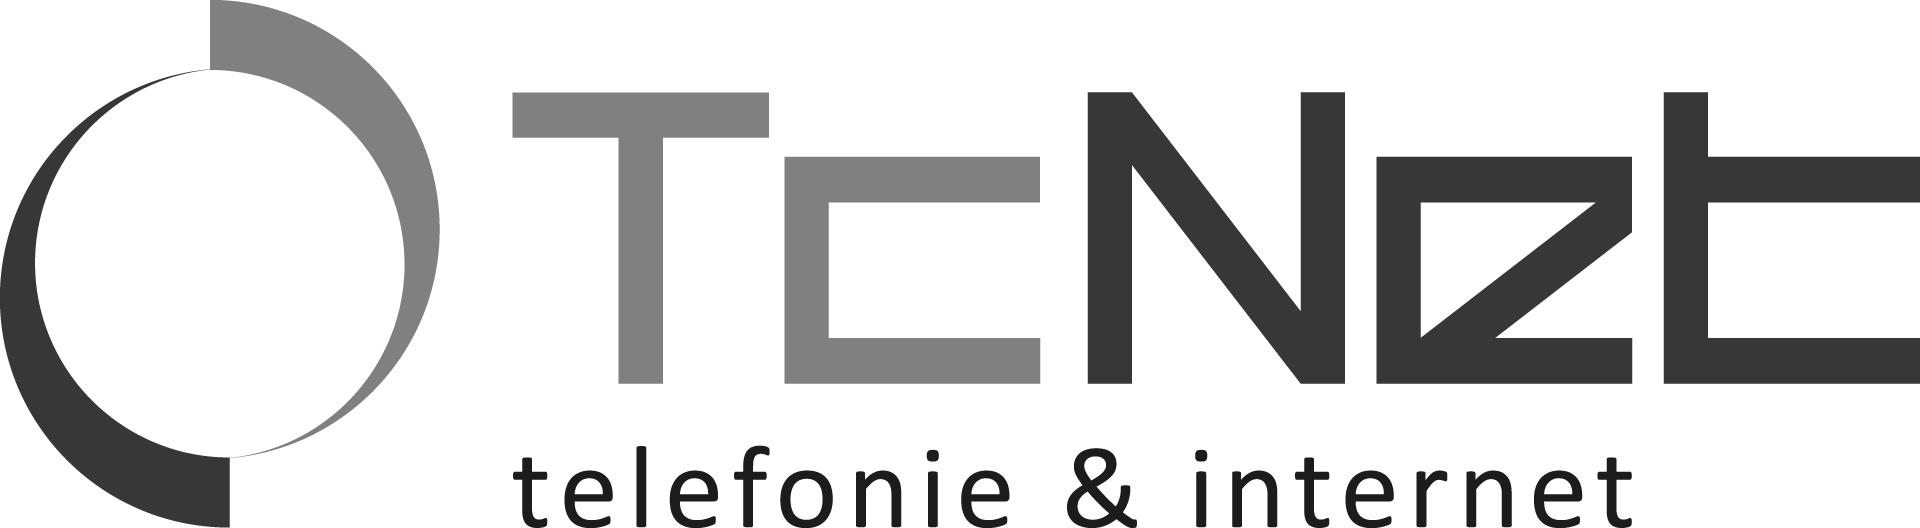 TcNet_Logo_Pantone_SW.png